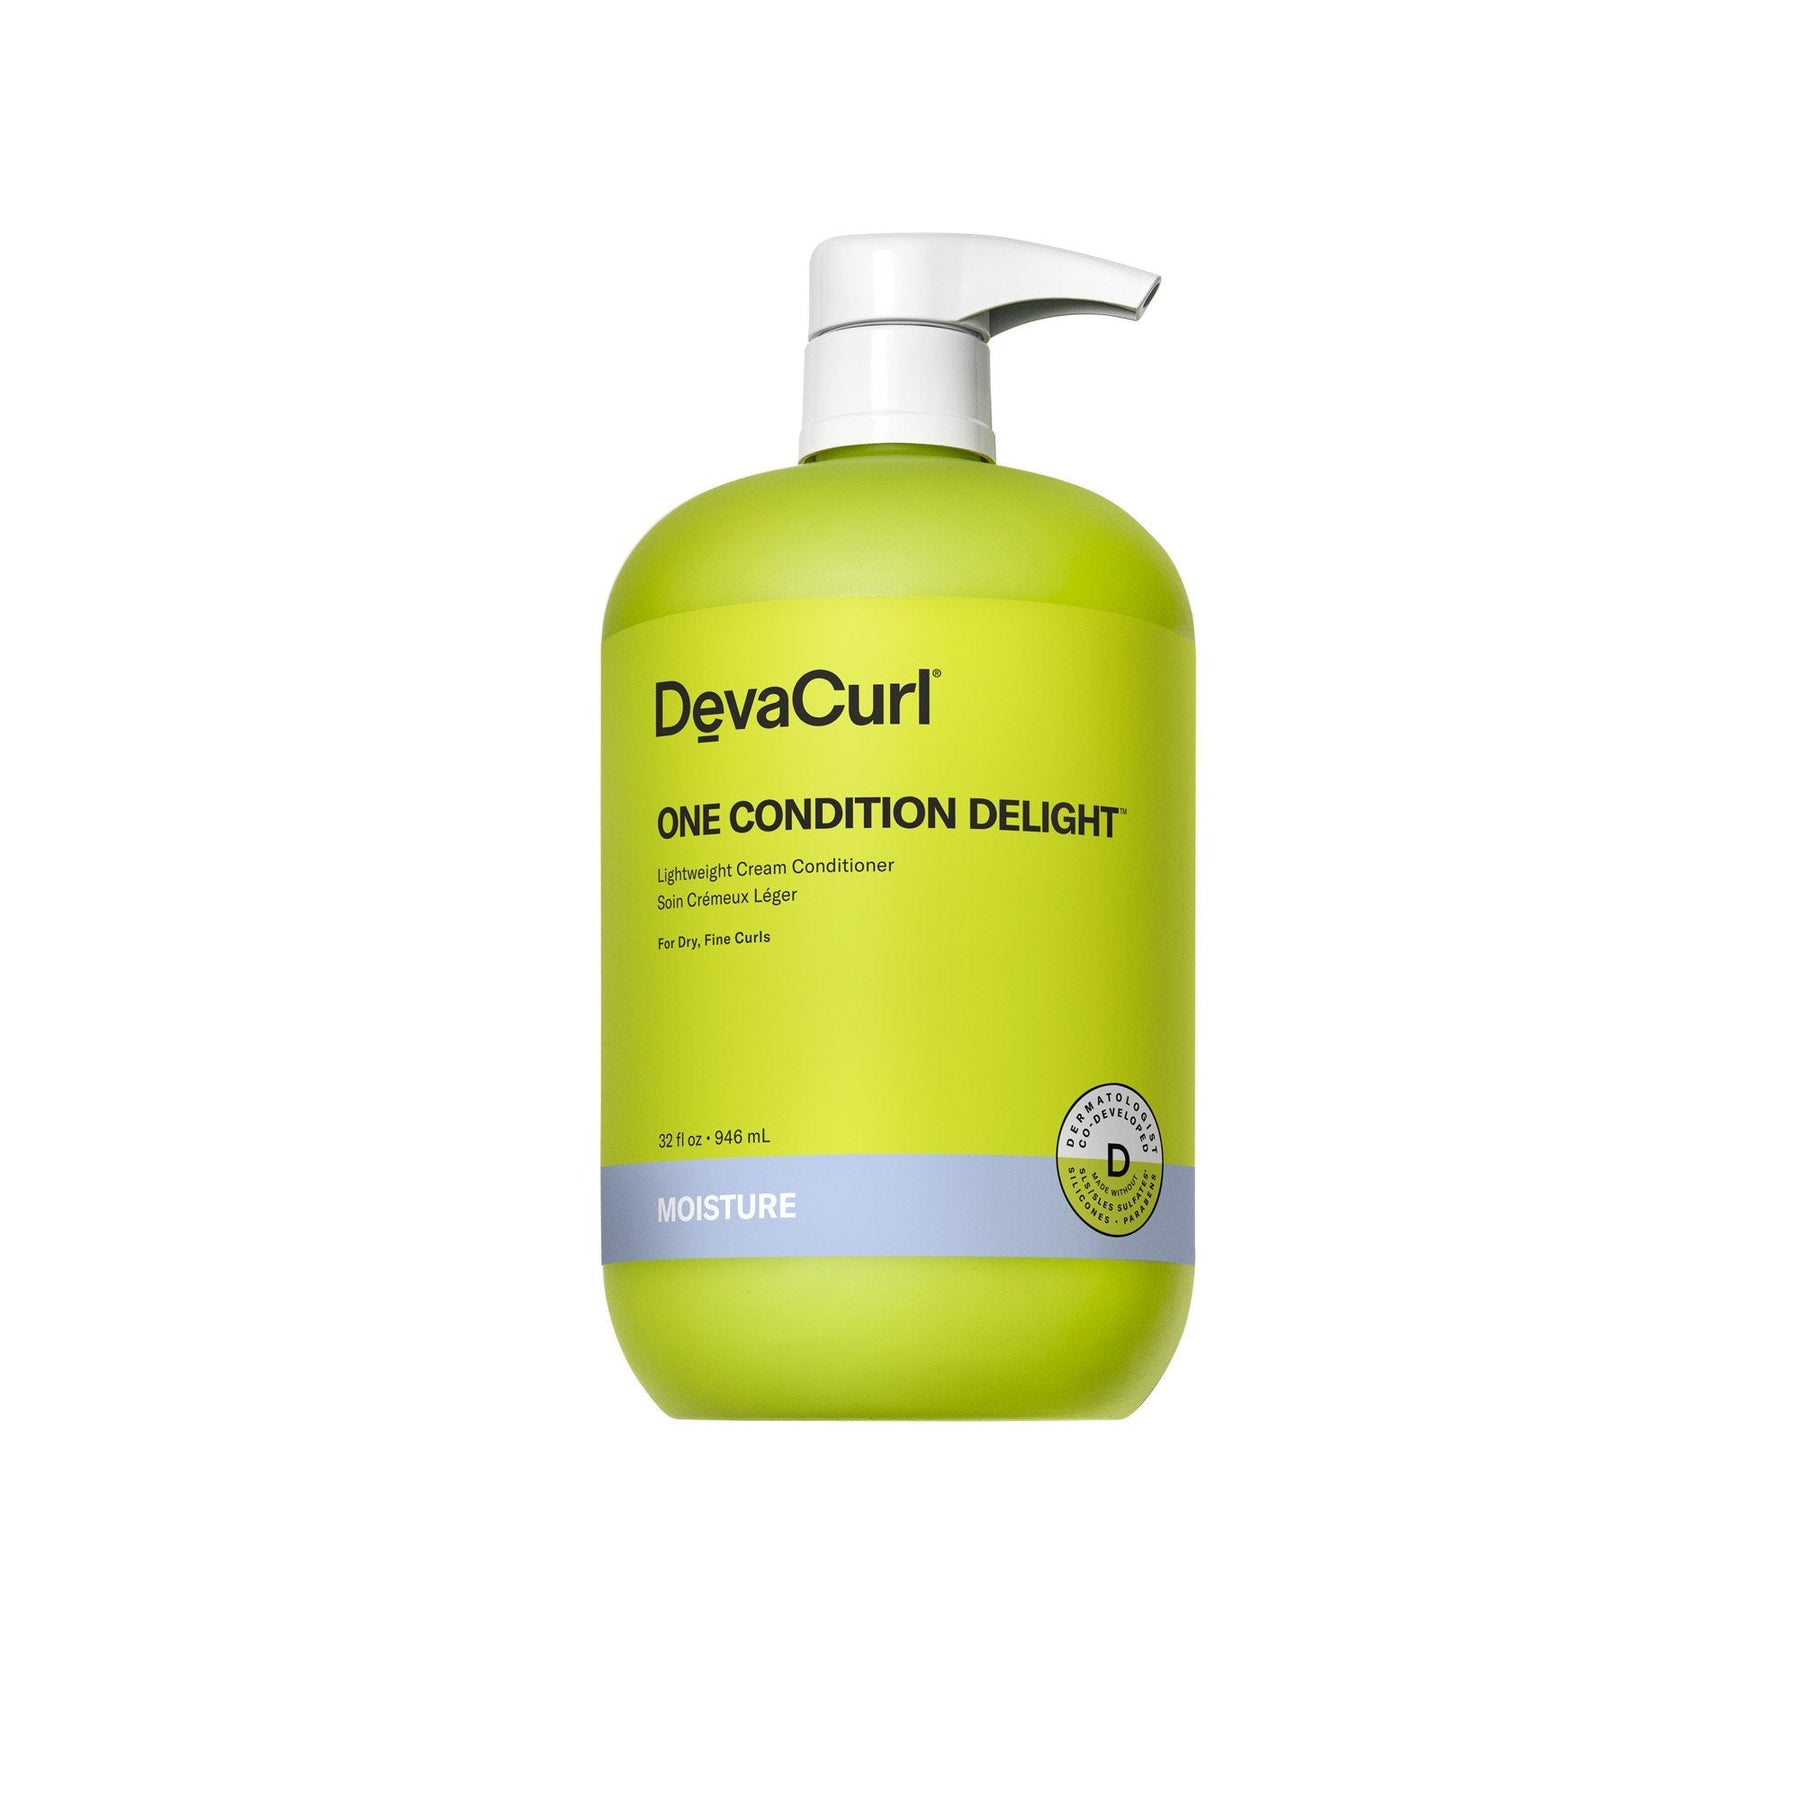 New! DevaCurl One Condition Delight - 32oz - by Deva Curl |ProCare Outlet|